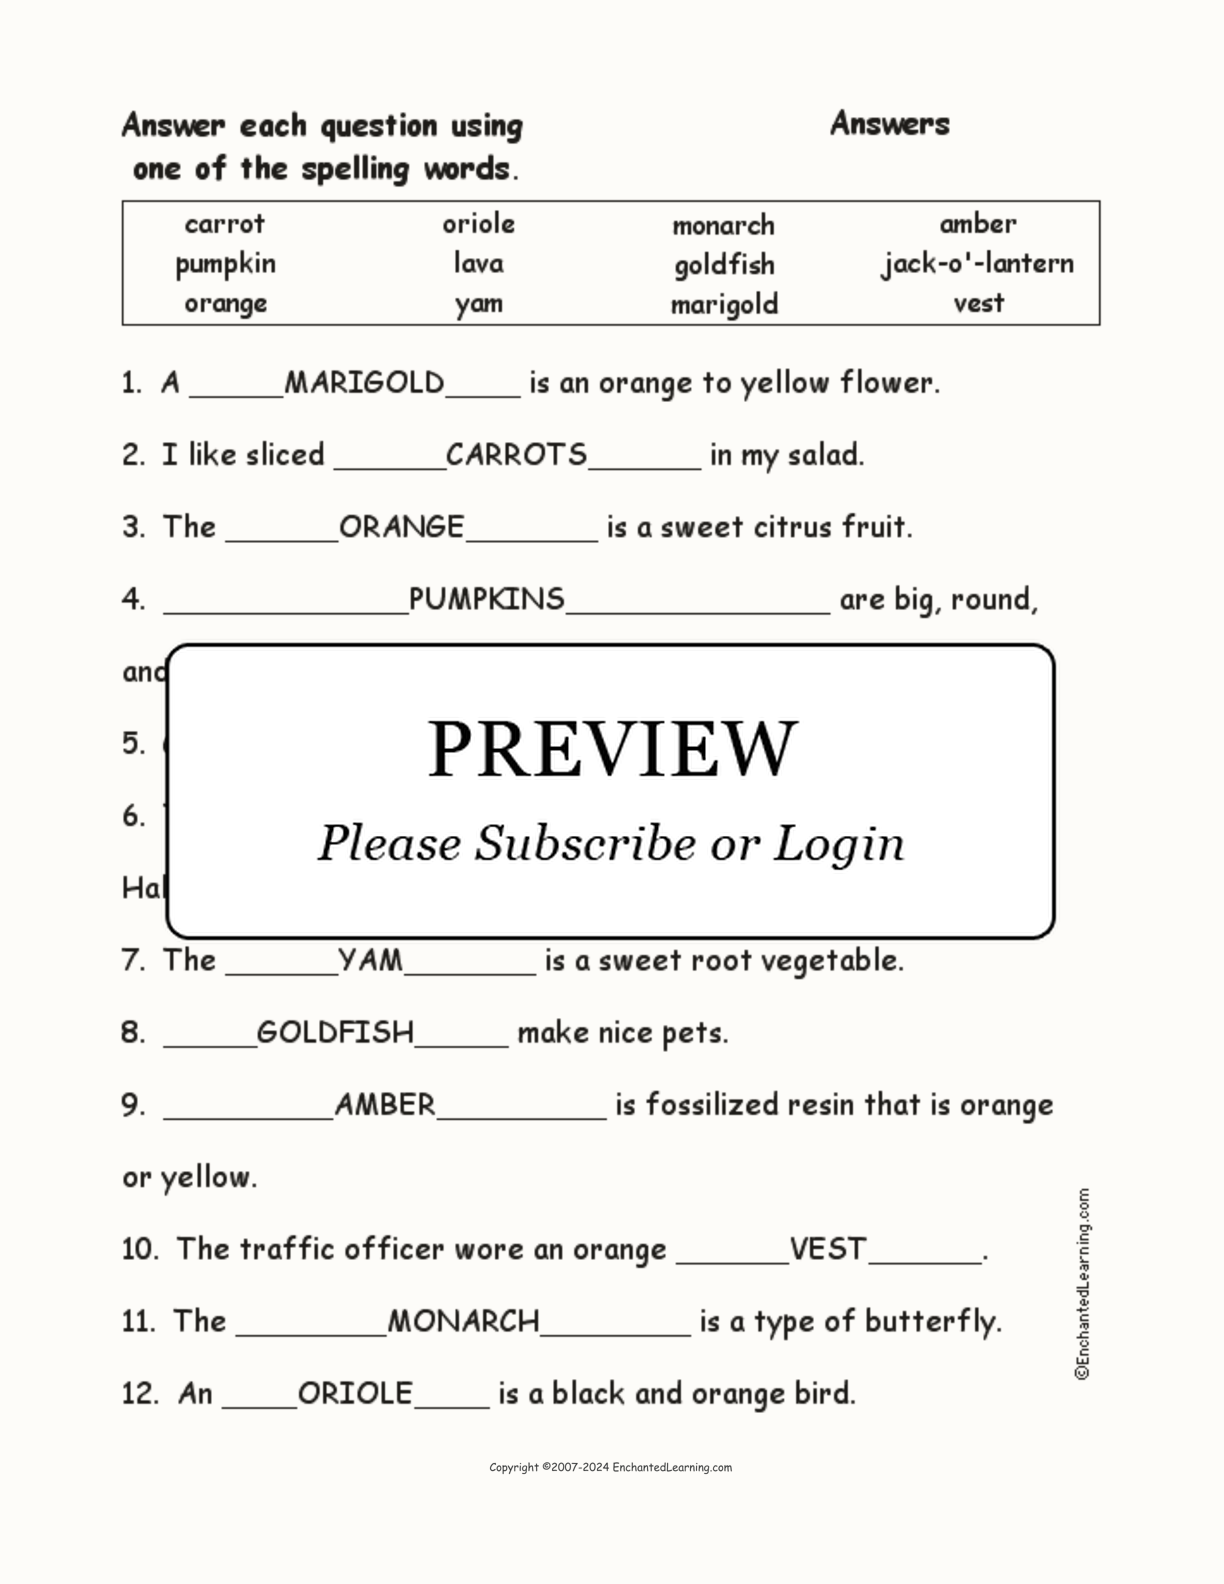 Orange Things: Spelling Word Questions interactive worksheet page 2